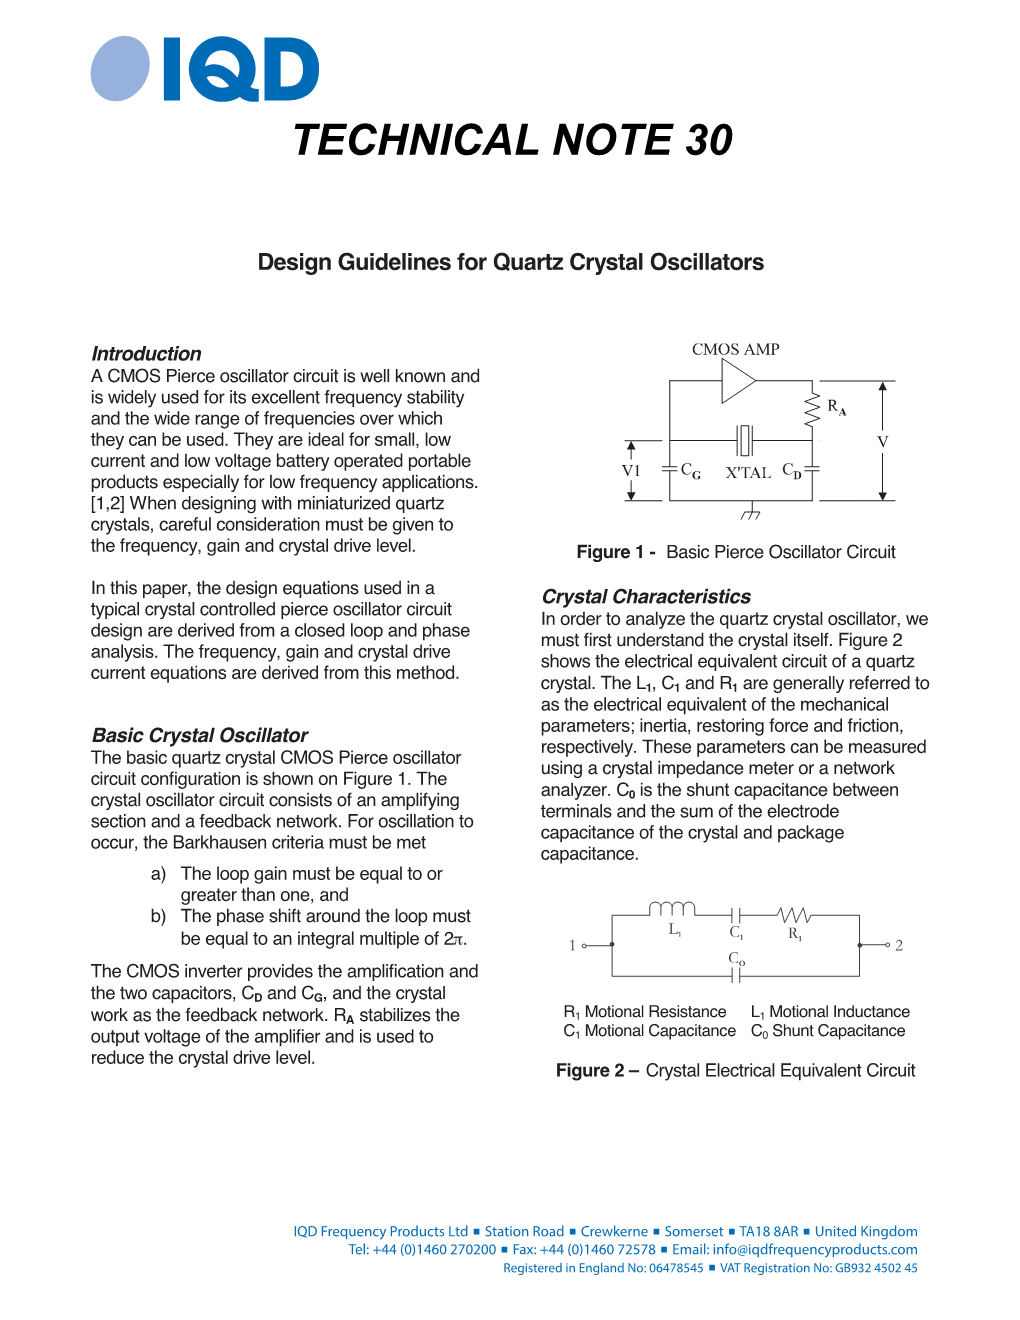 TECHNICAL NOTE 30 TECHNICAL NOTE 30 Design Guidelines for Quartz Crystal Oscillators